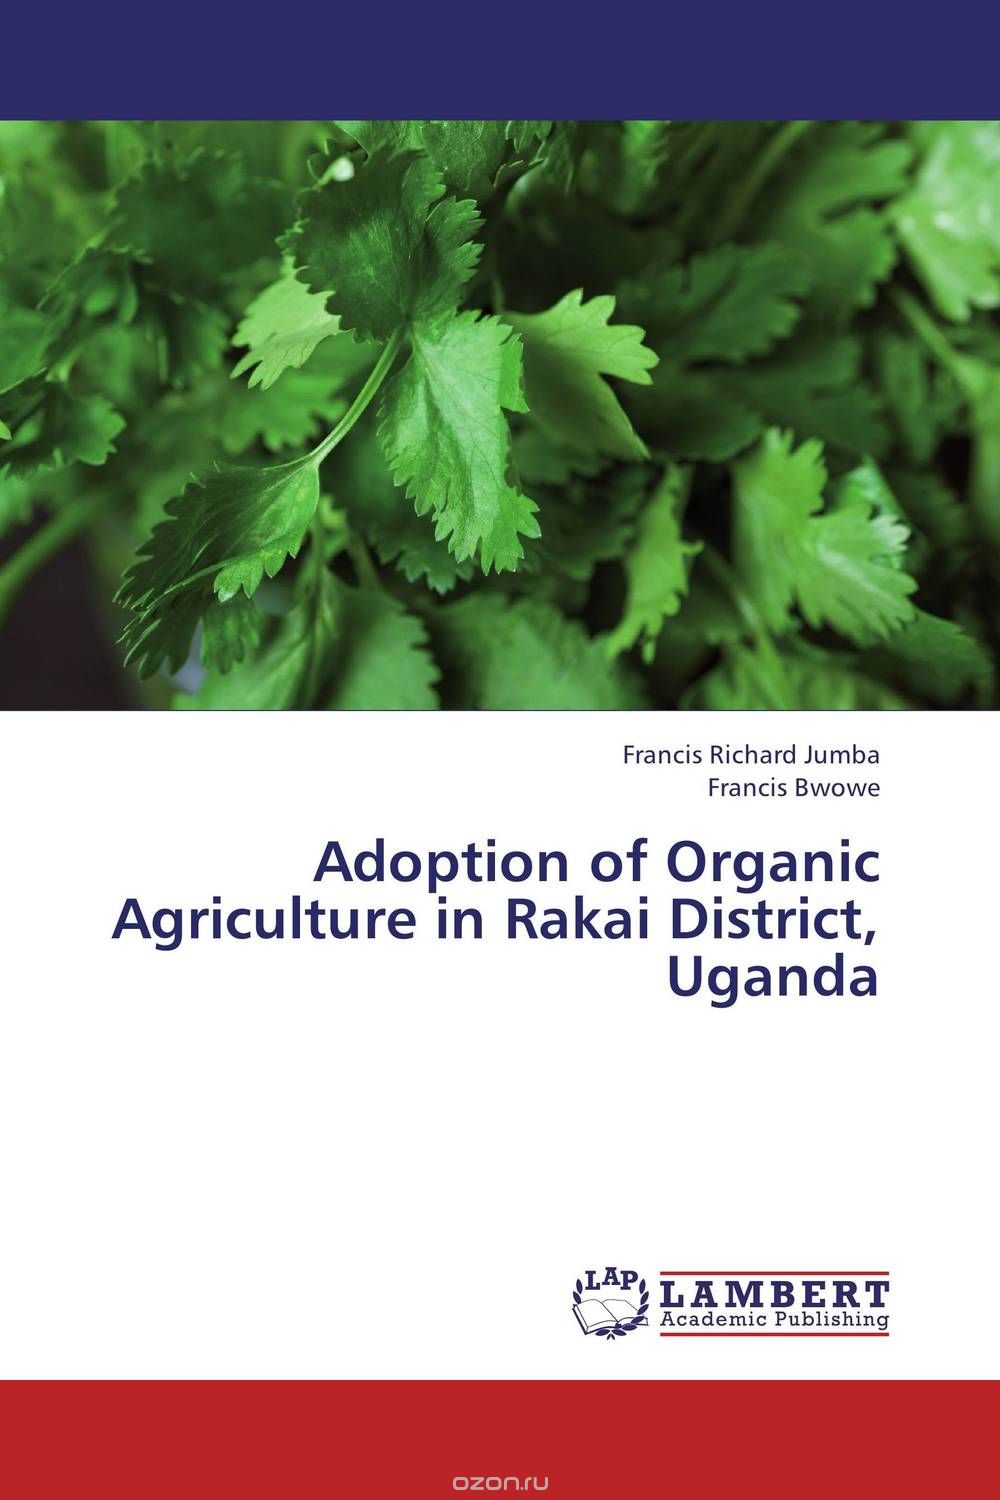 Скачать книгу "Adoption of Organic Agriculture in Rakai District, Uganda"